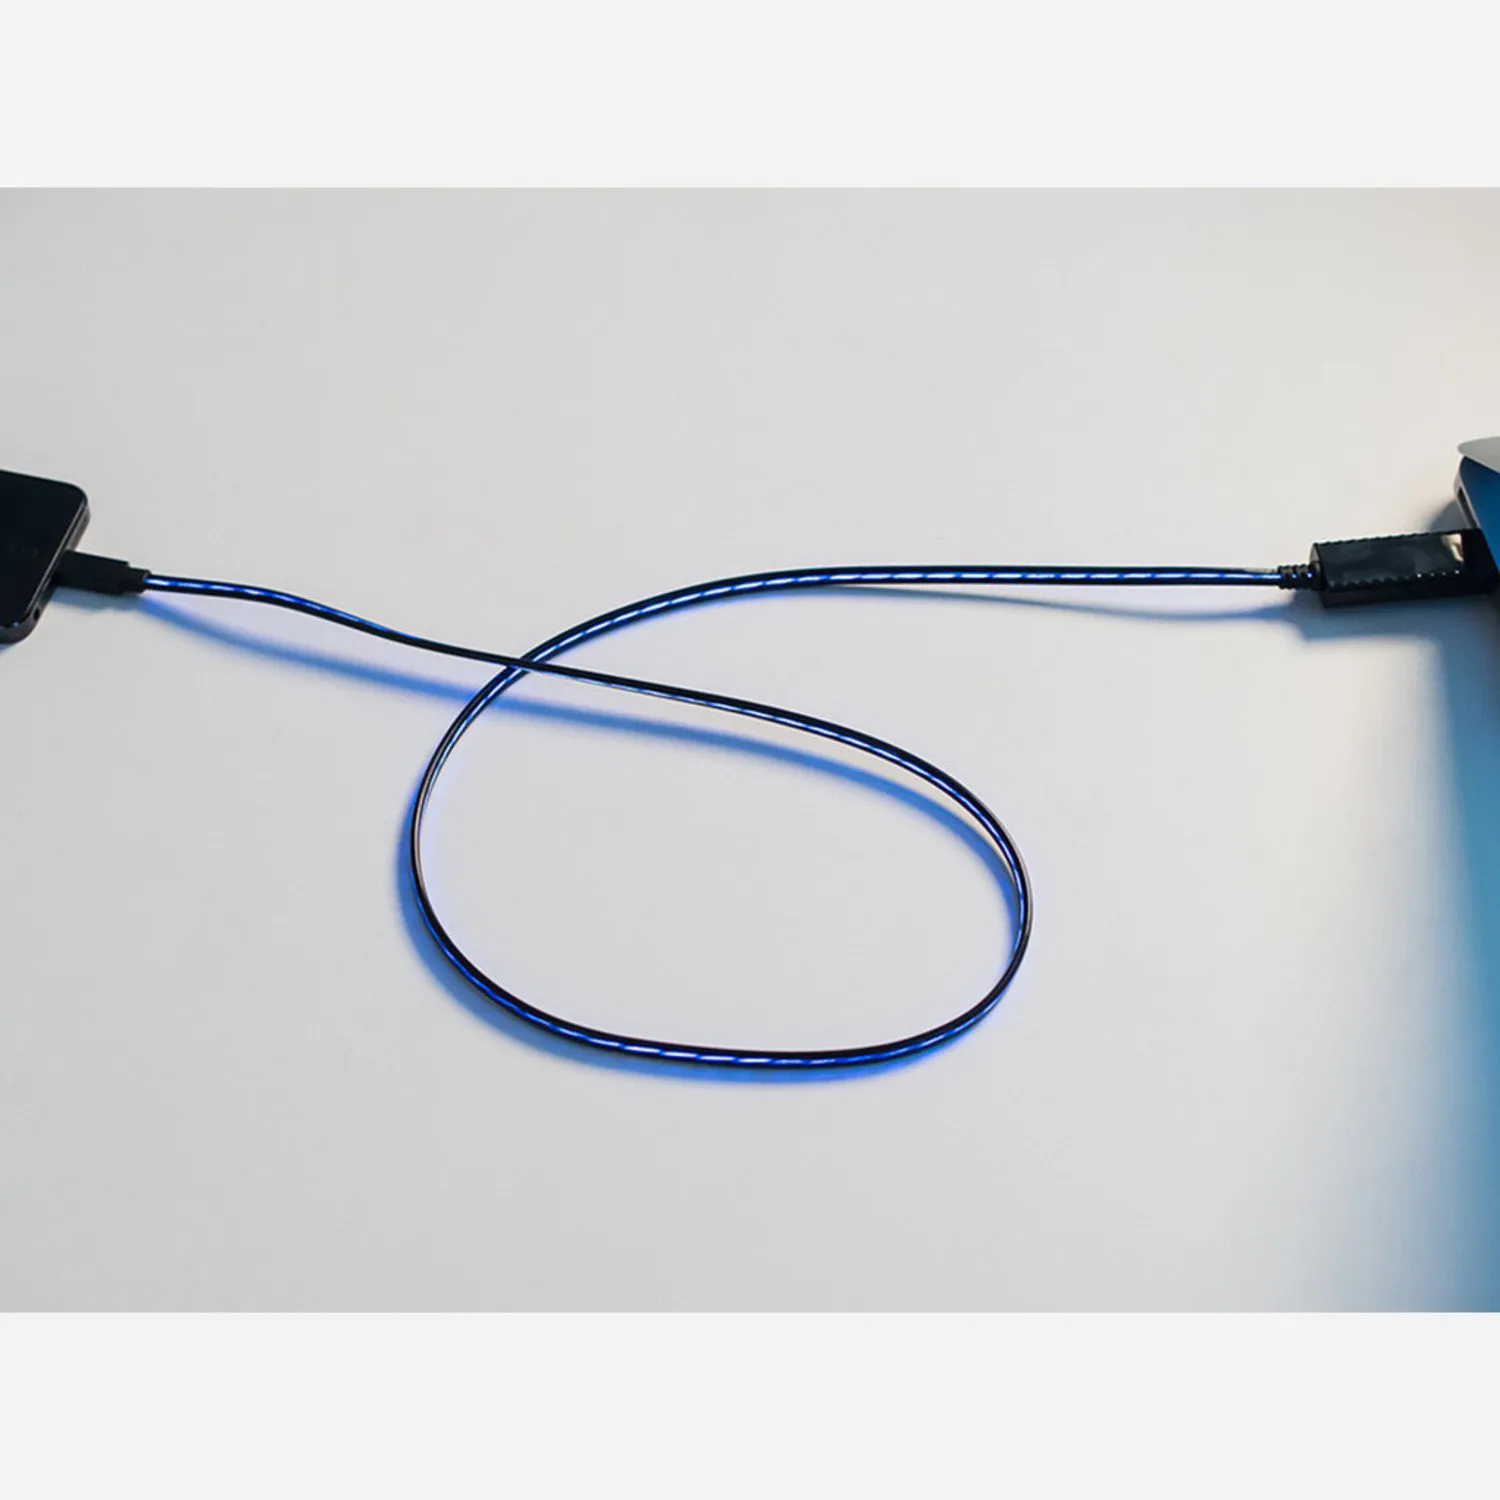 Photo of Flowing Effect iOS Lightning Cable - Black w/Aqua EL